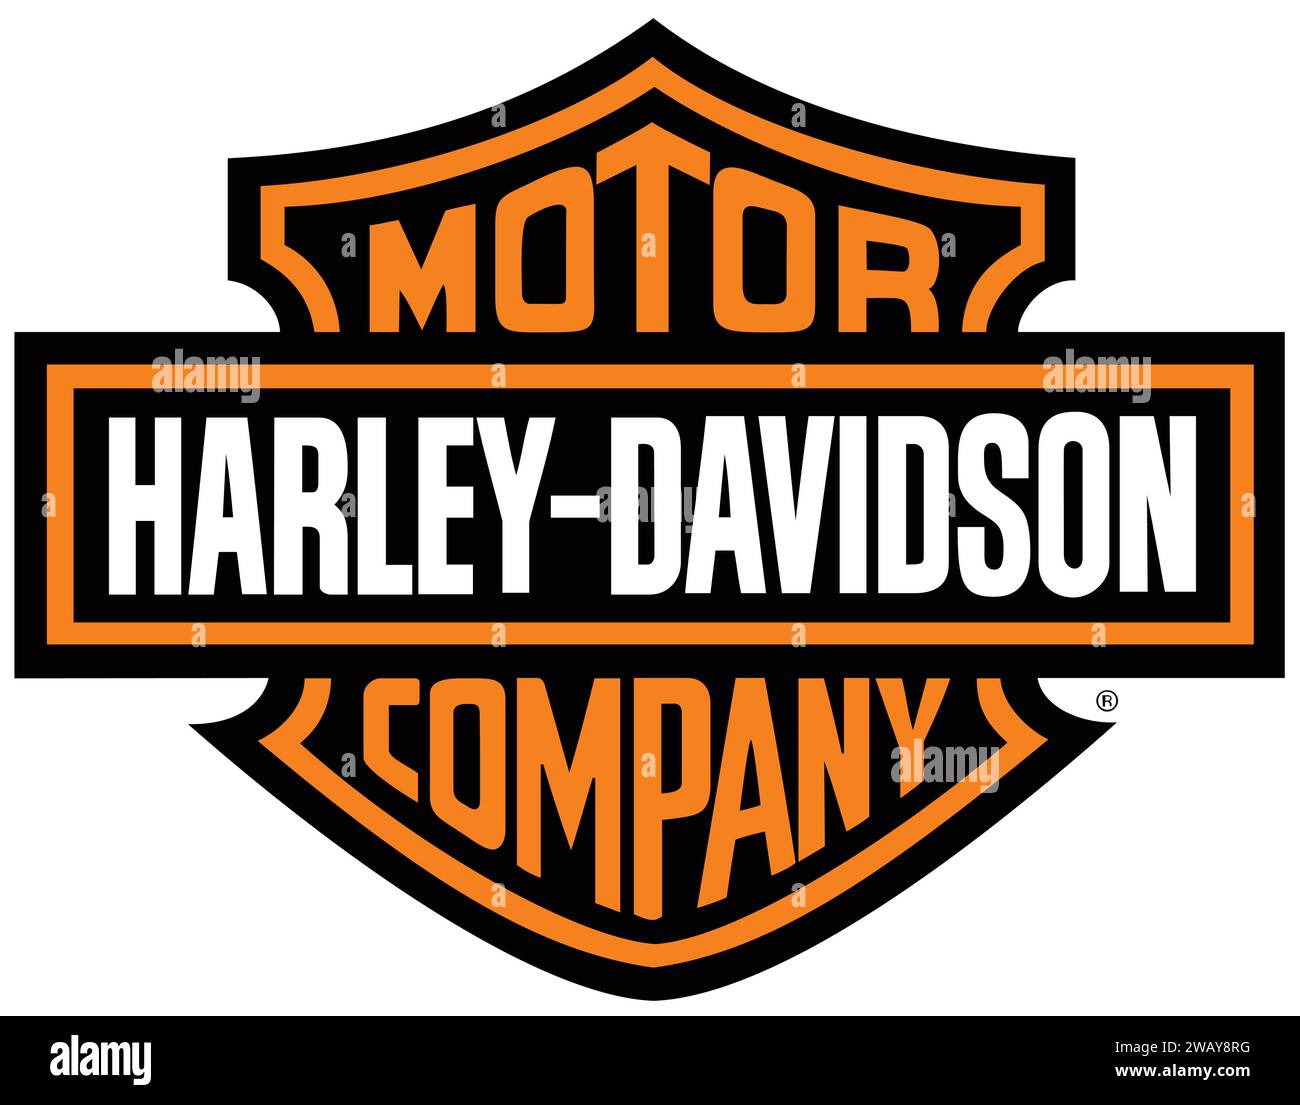 Harley Davidsons logo or icon | Automobile Brand logo | Harley Davidson's Motorcycles Stock Vector